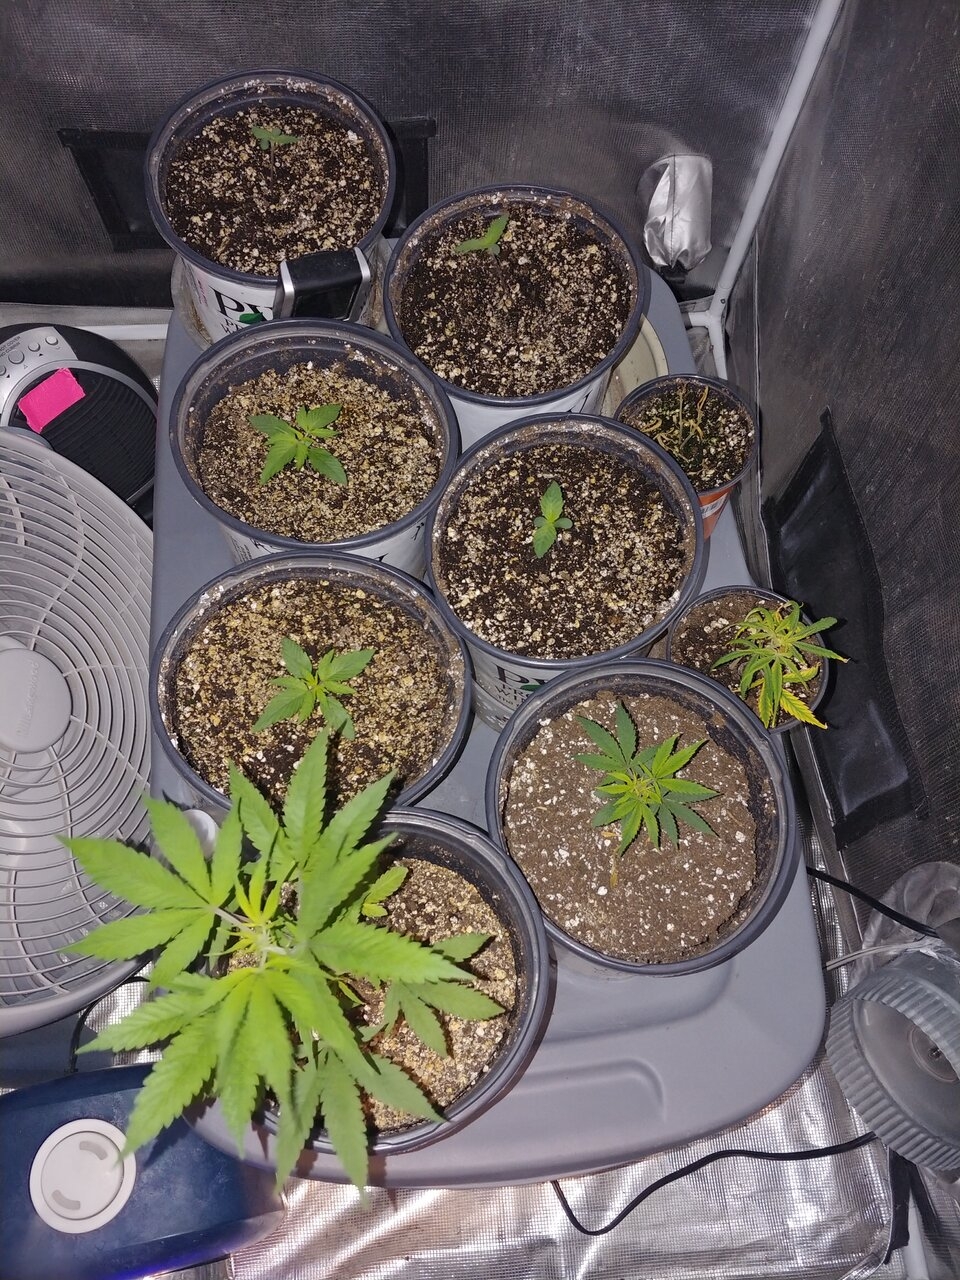 Seedlings and clones in 4x4